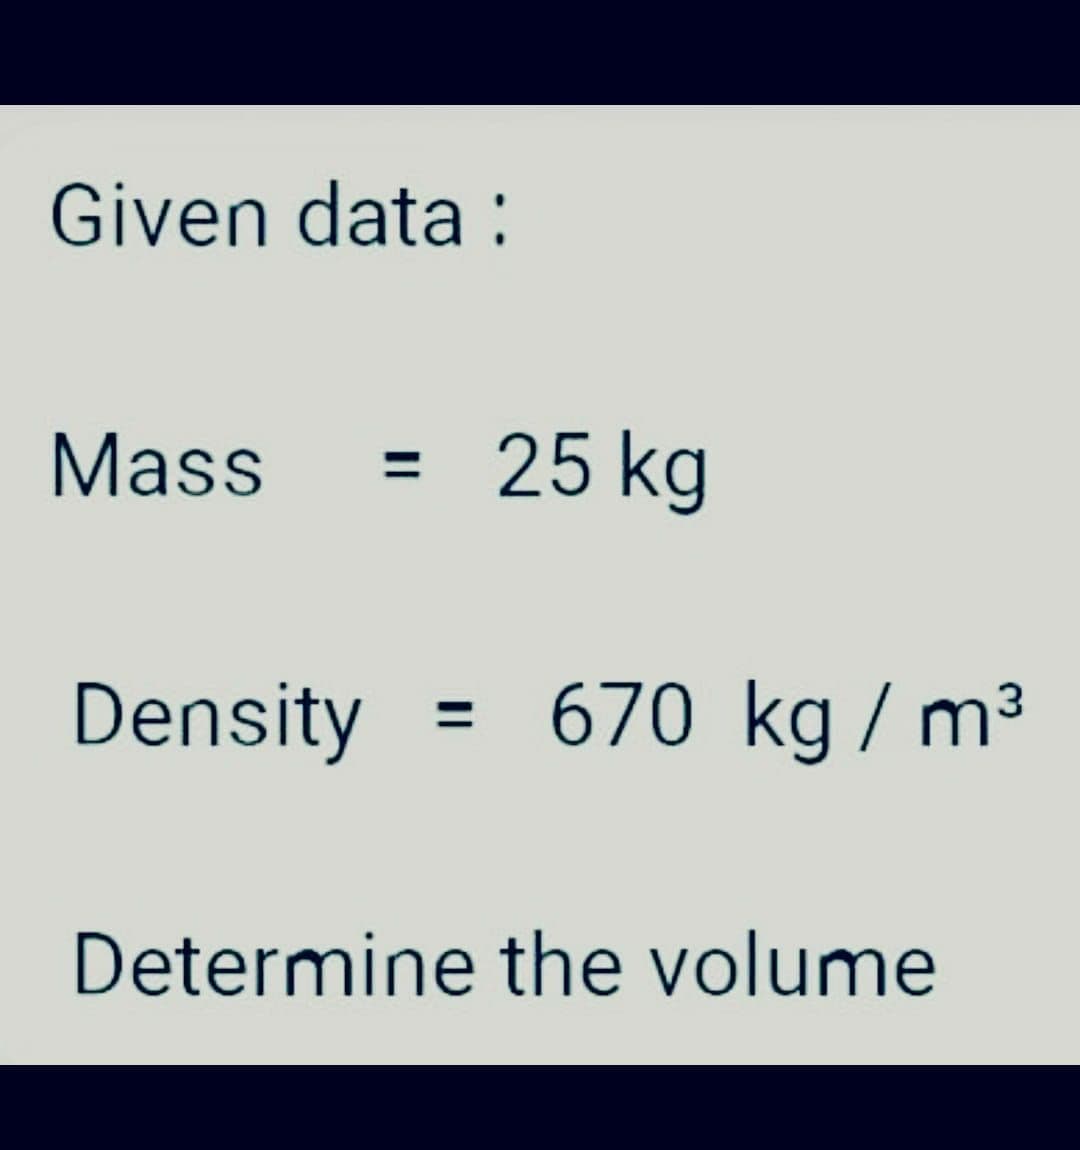 Given data:
Mass =
Density
=
Determine the volume
25 kg
670 kg / m³